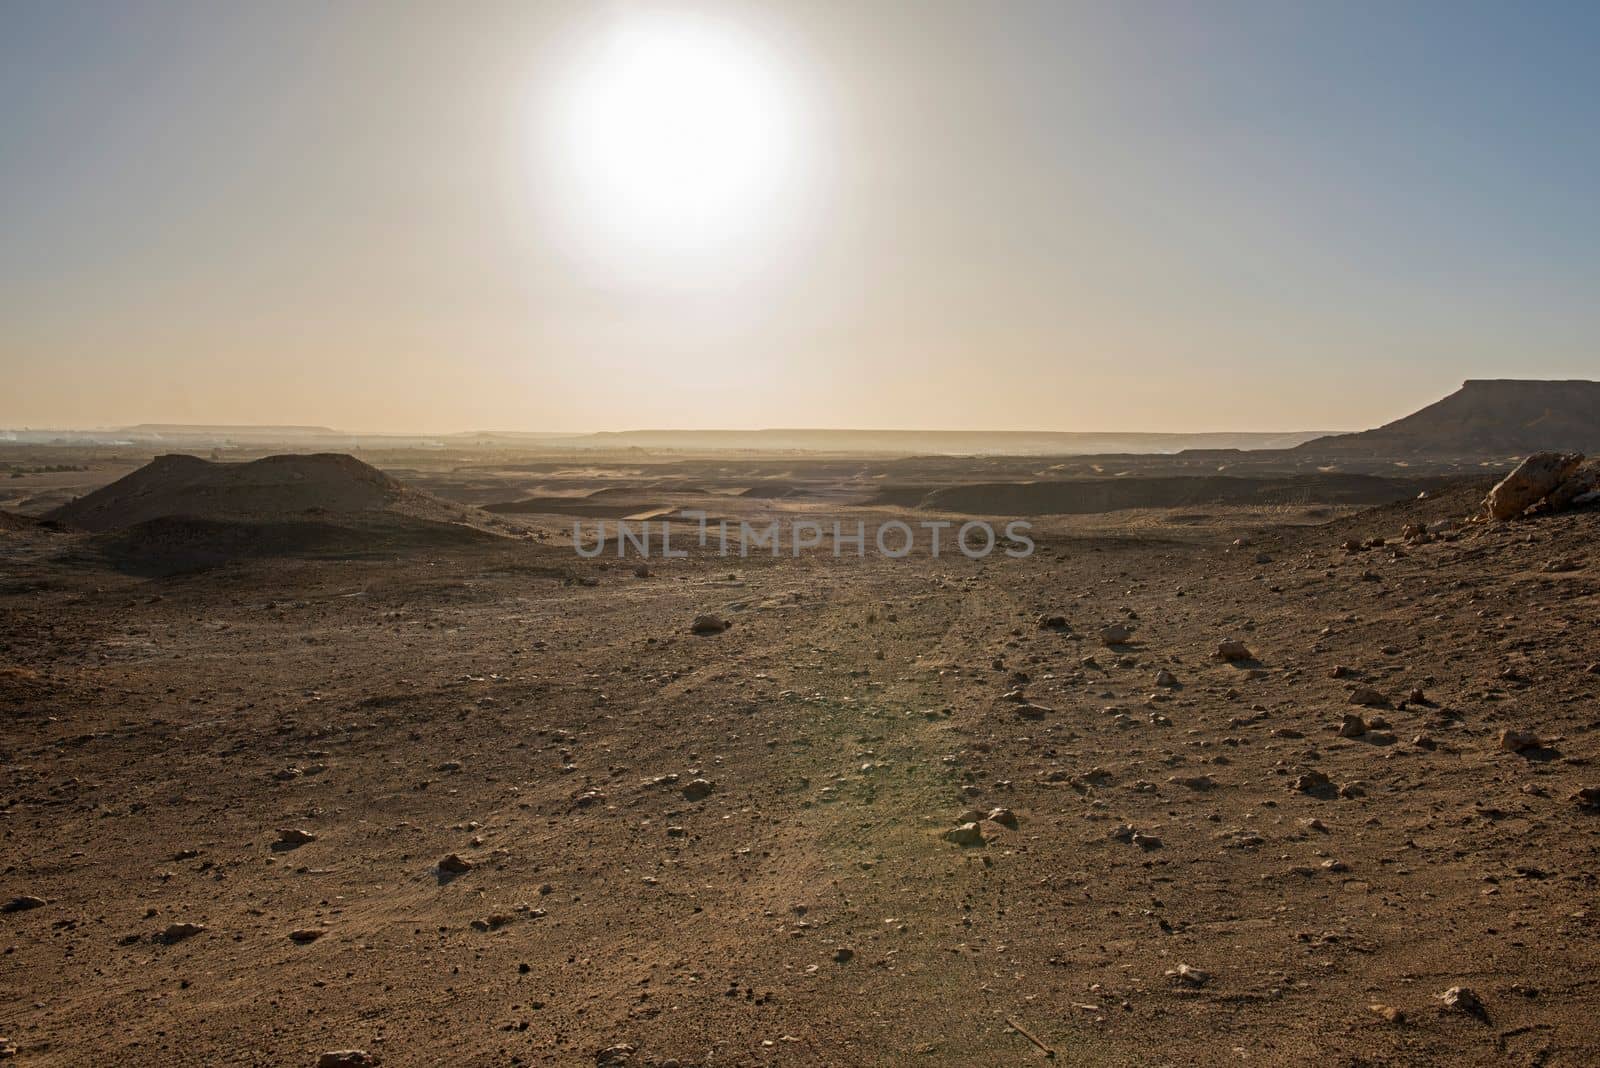 Barren rocky desert landscape in hot climate by paulvinten